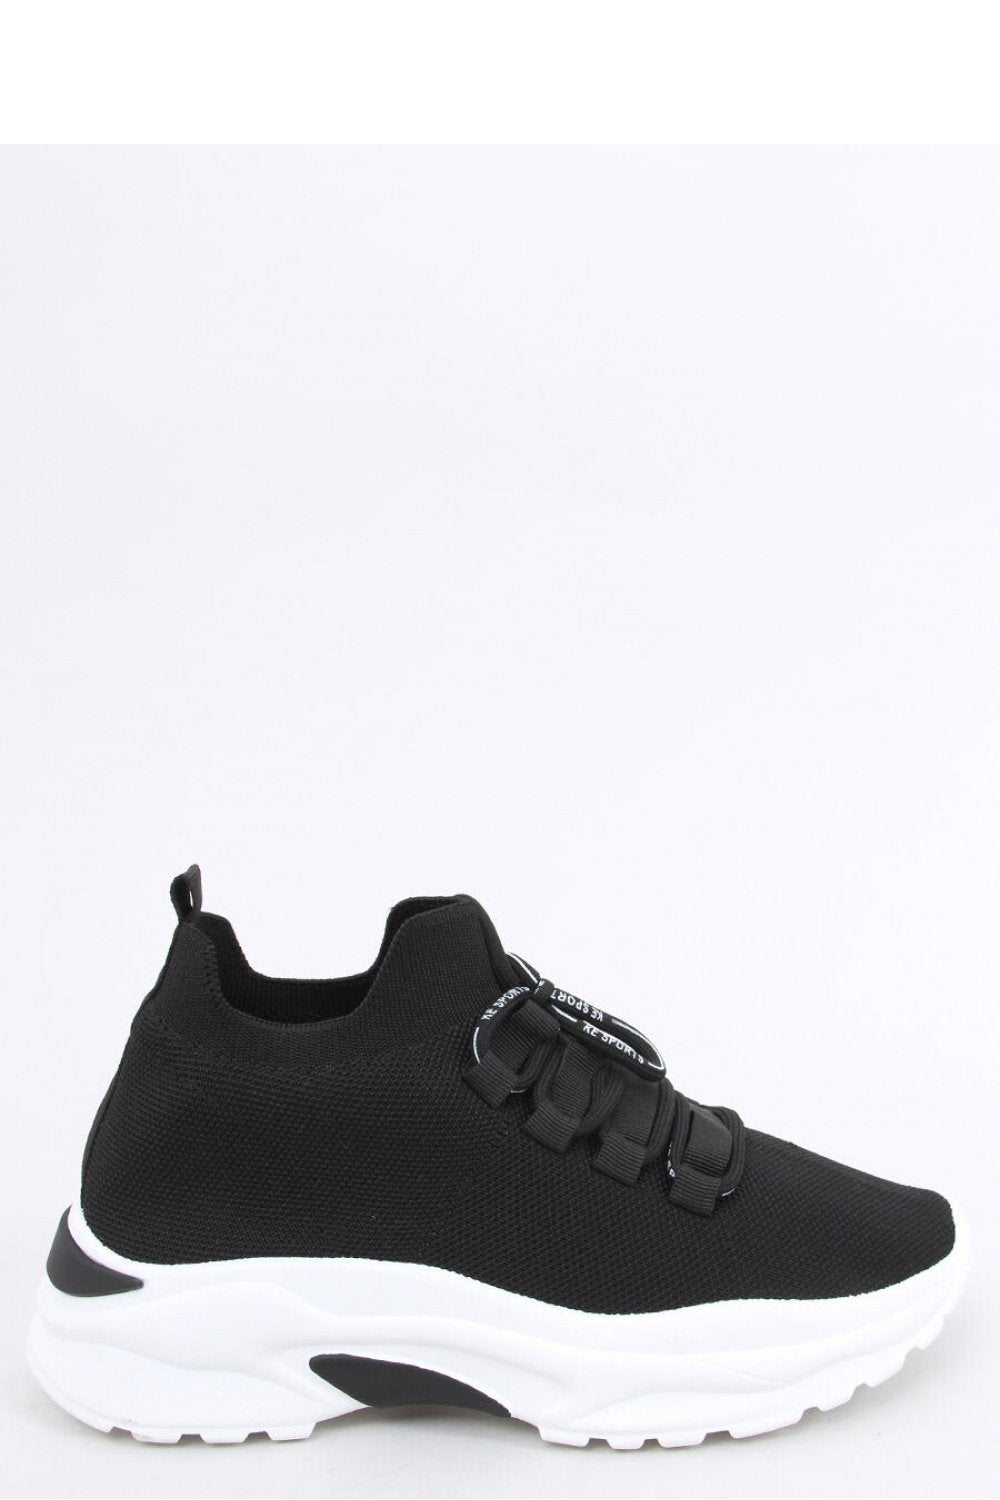 Sport Shoes model 161987 Inello Posh Styles Apparel